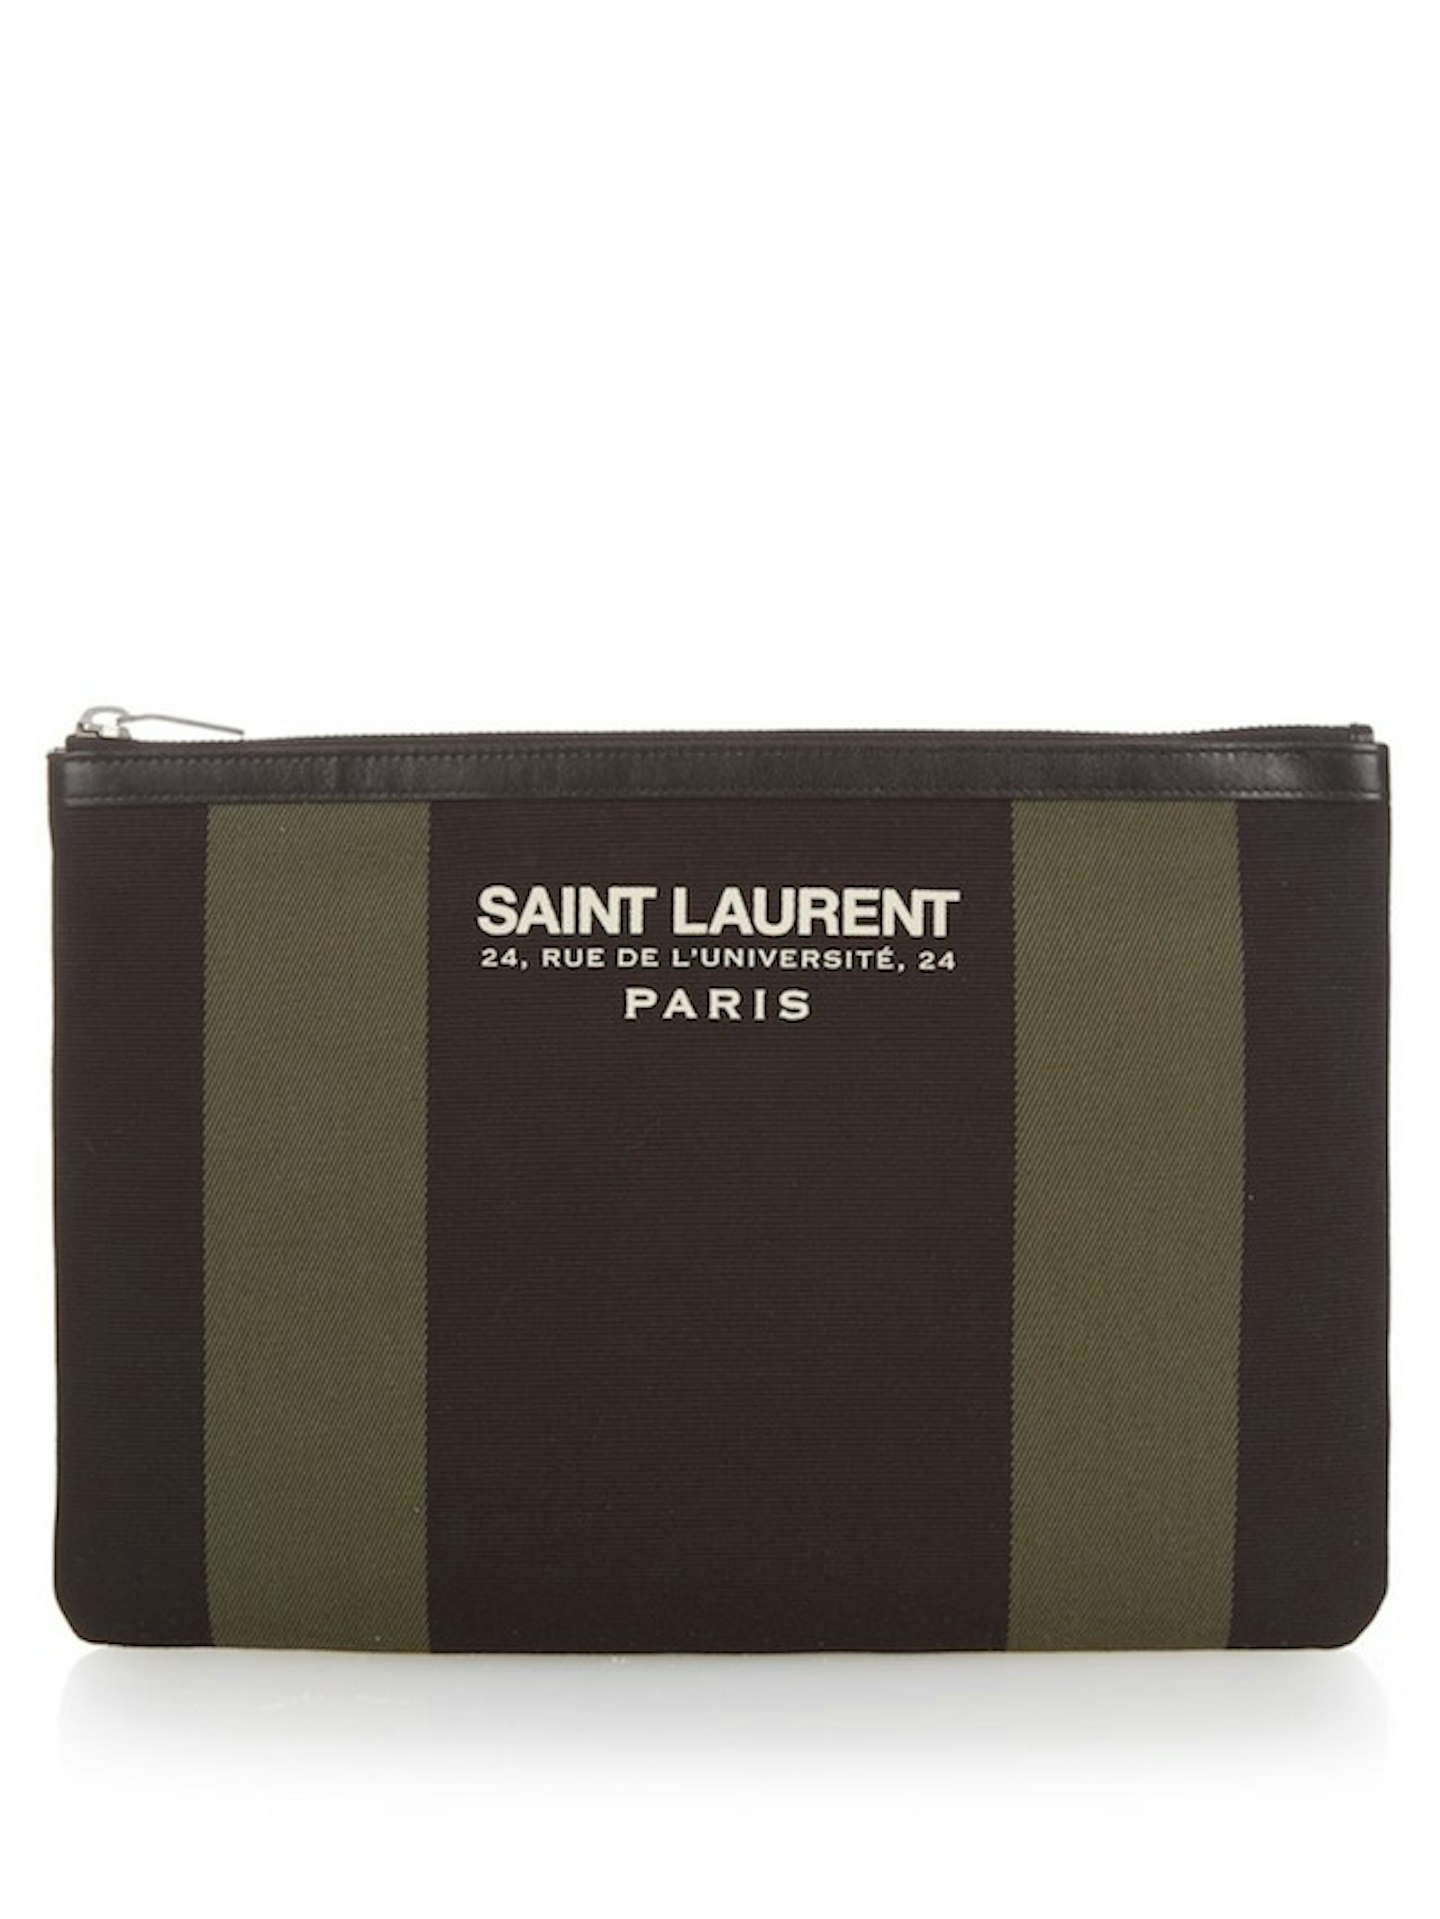 Saint Laurent Logo Bag